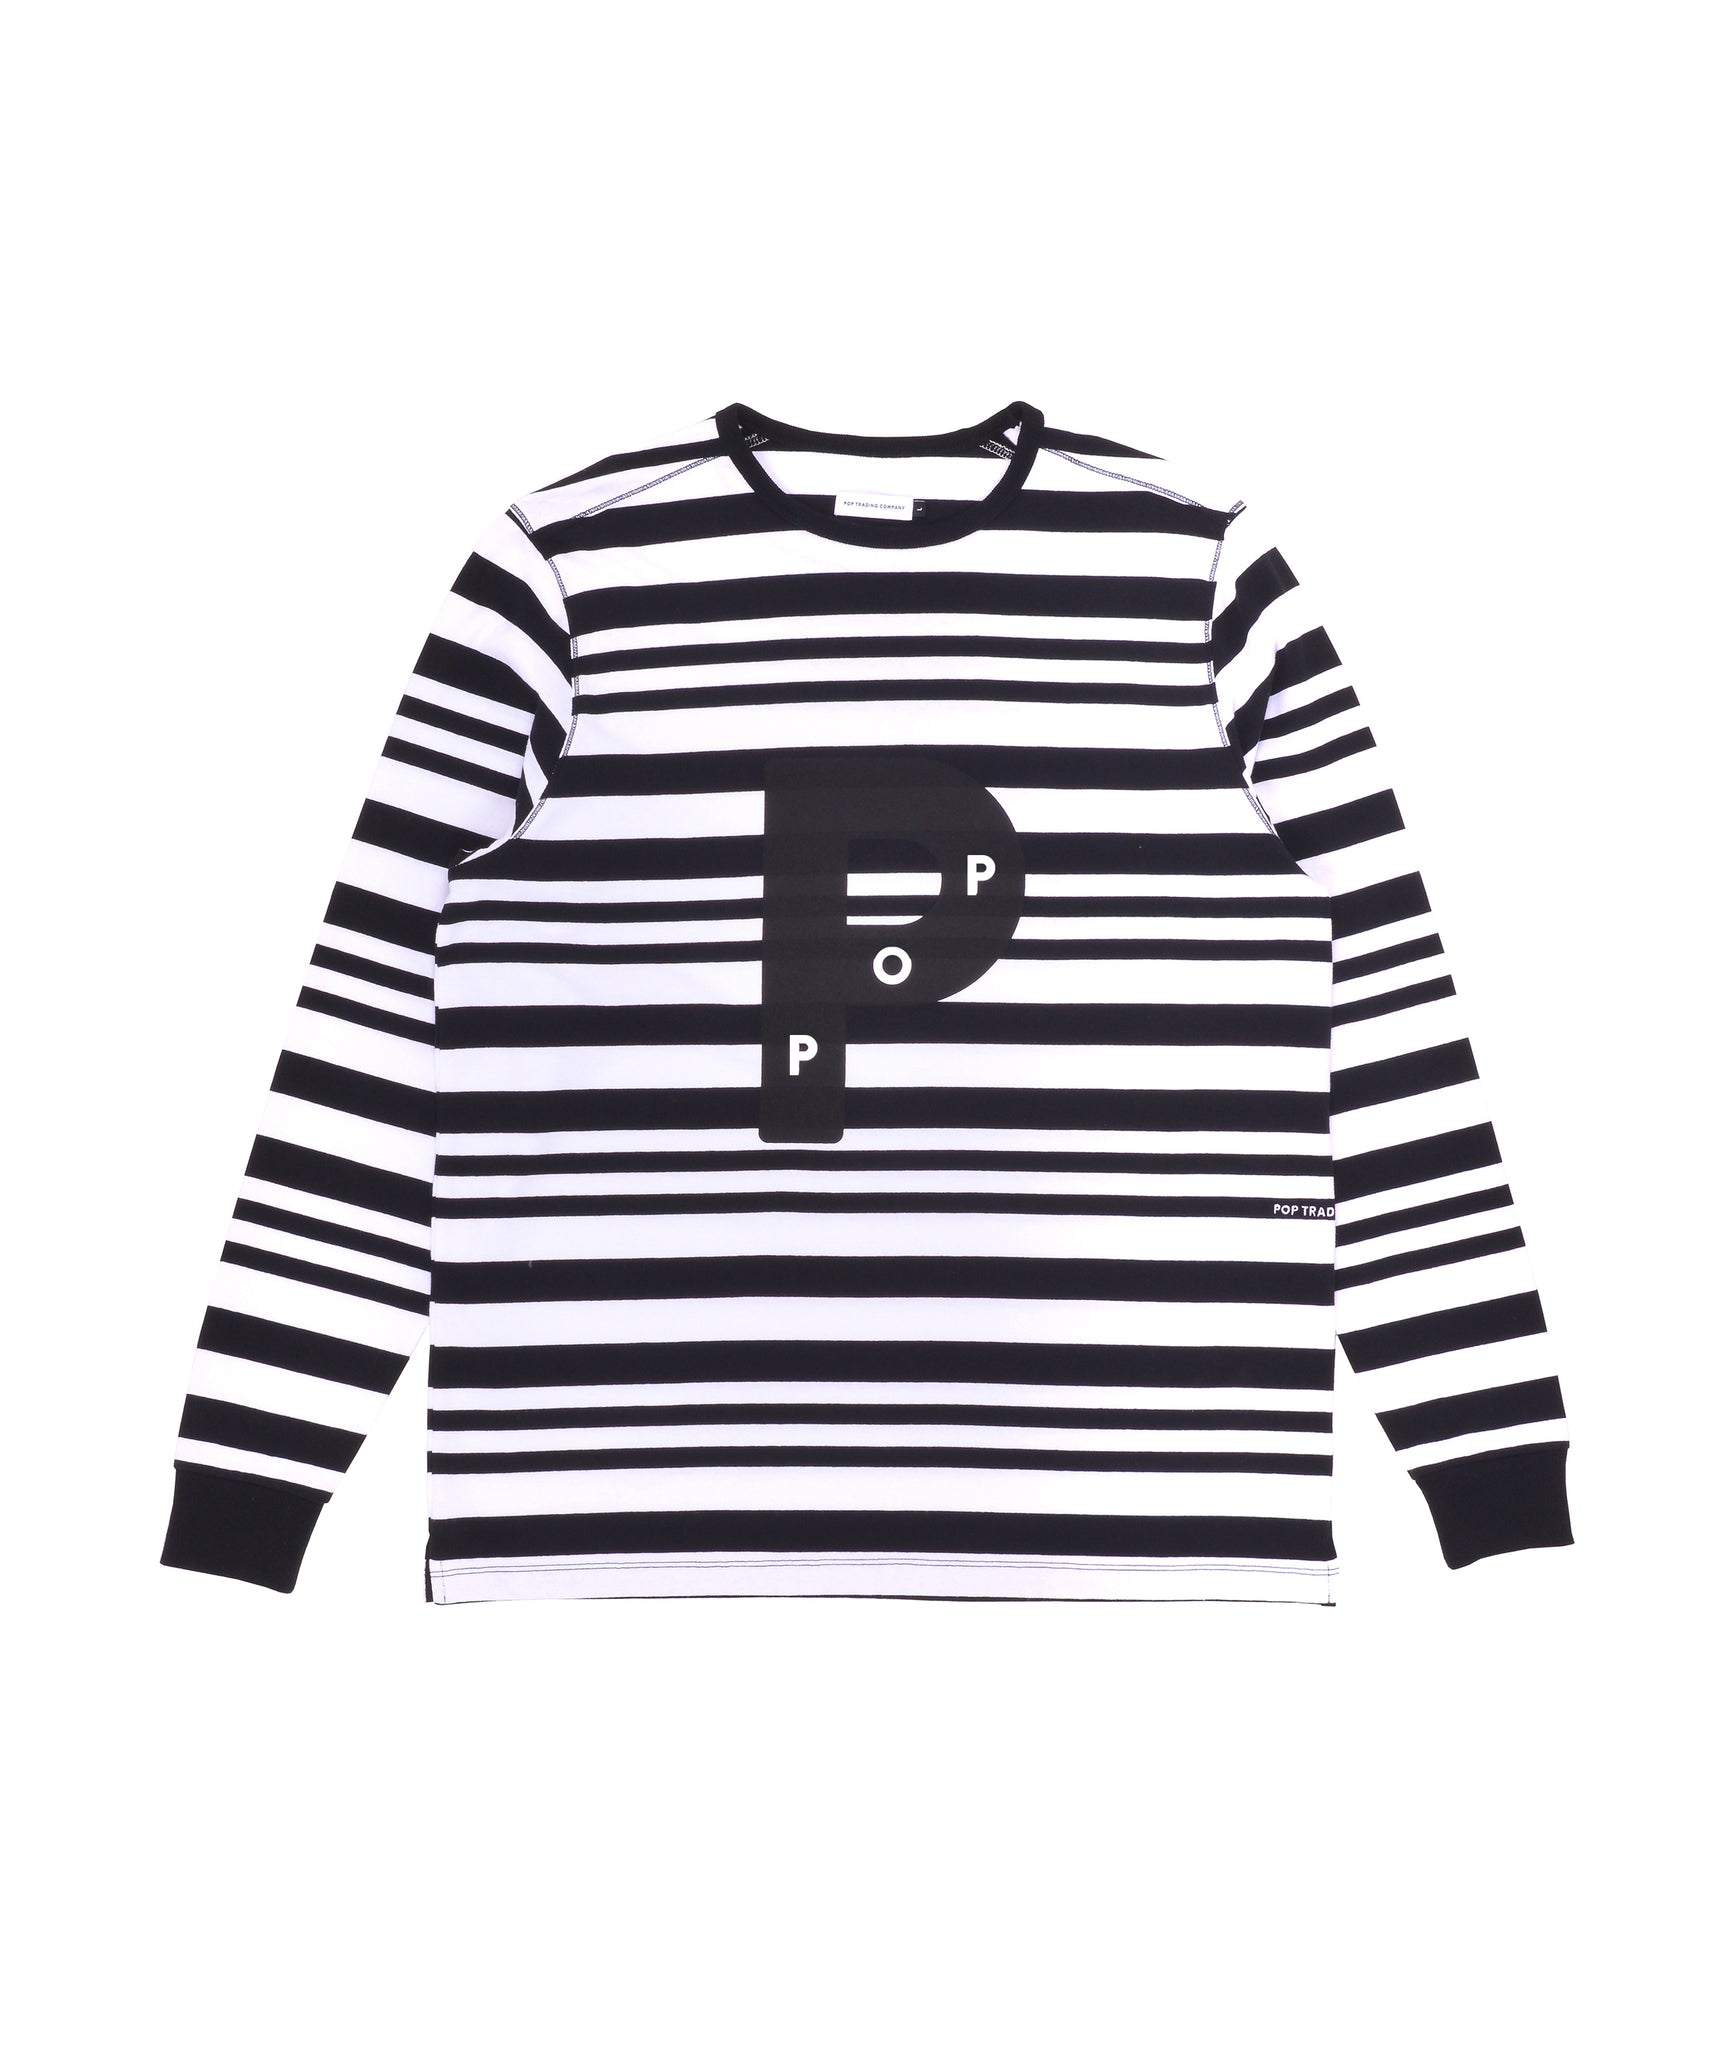 Big P Striped Longsleeve T-Shirt - Black/White